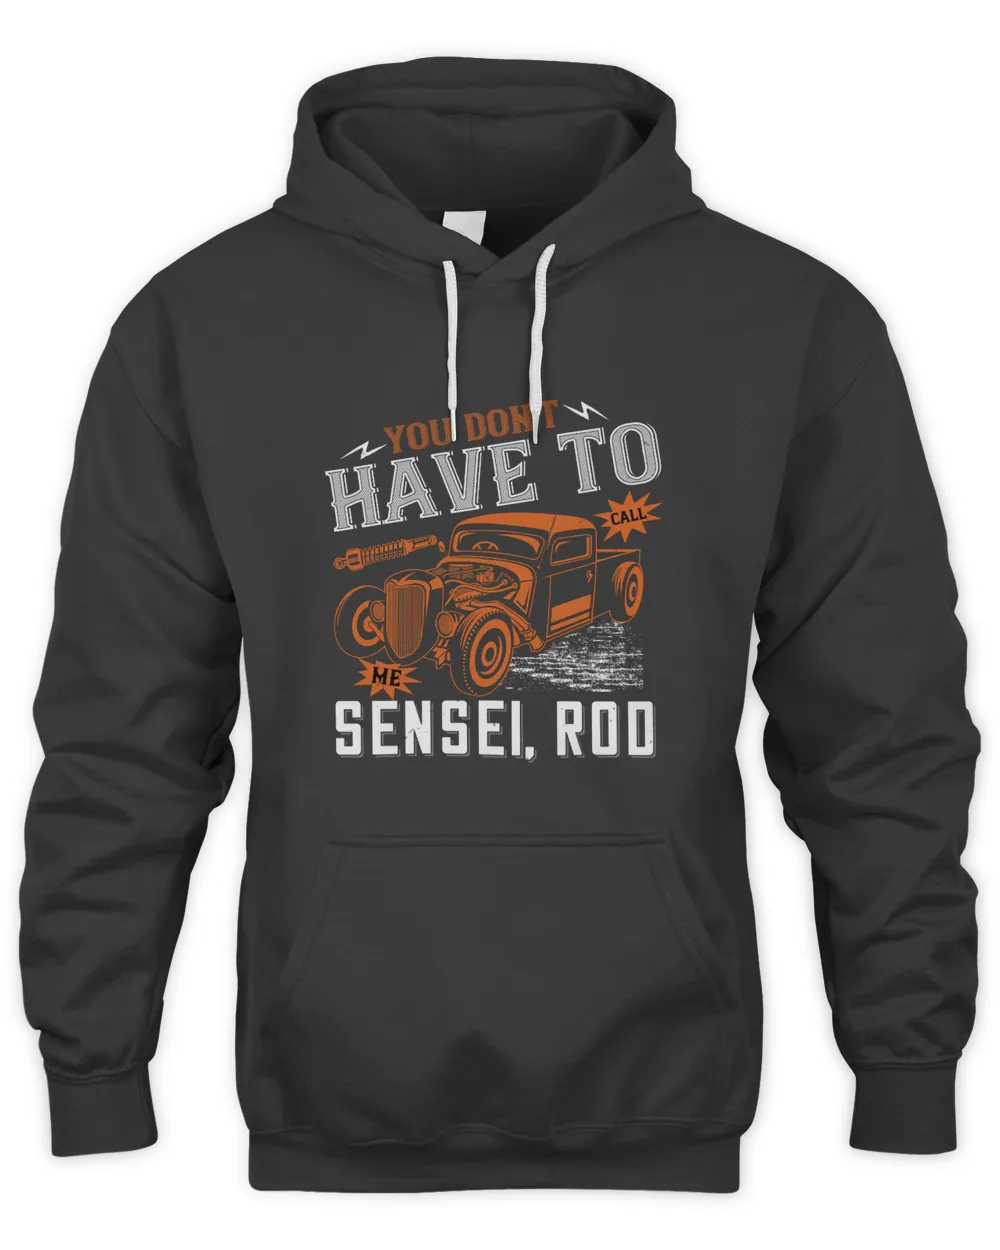 You don't have to call me Sensei, Rod-01